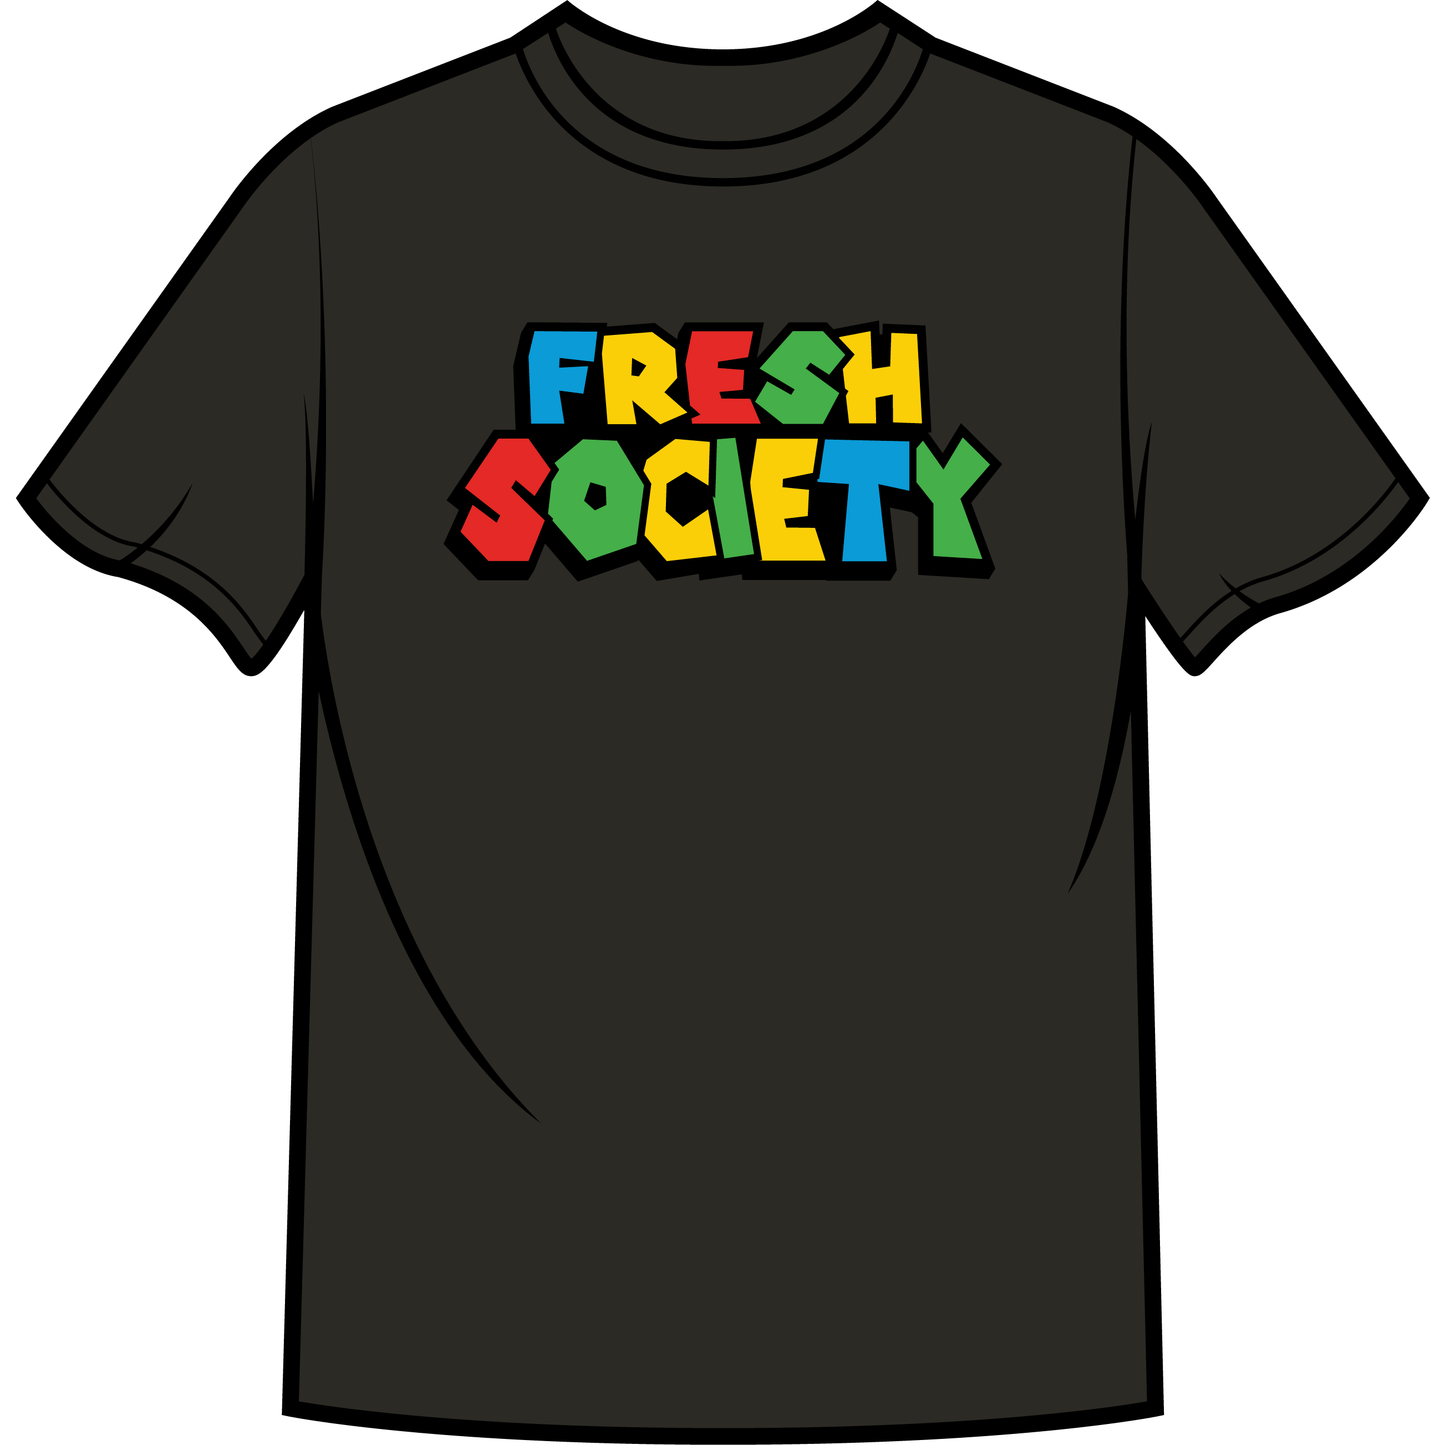 Fresh Society "Super Fresh" Black Tee